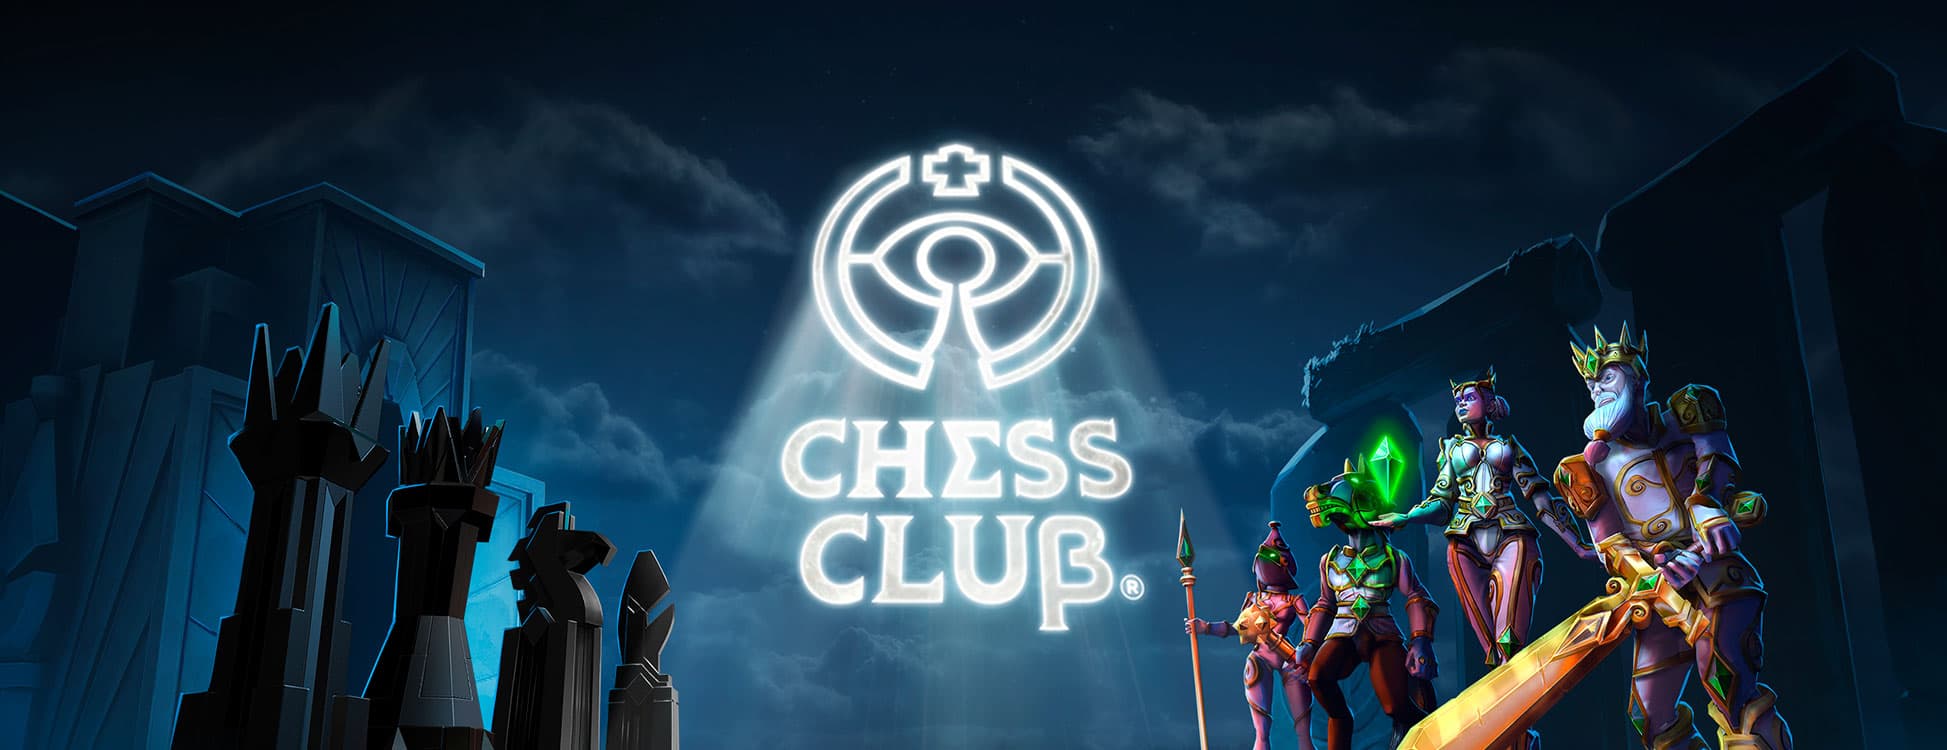 Portada tráiler Chess Club VR